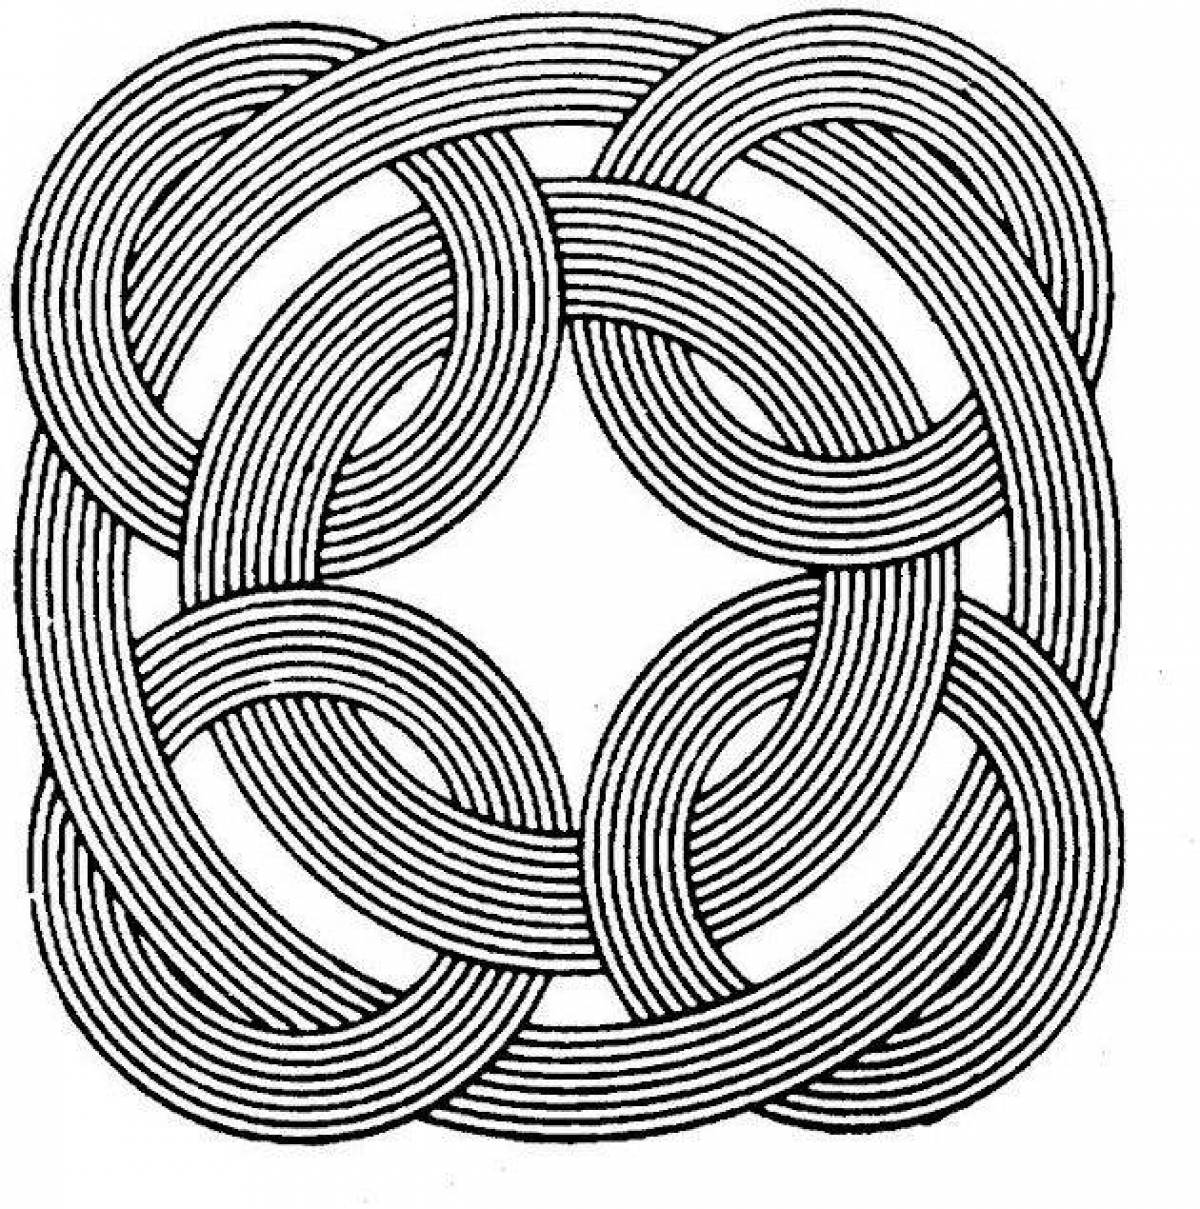 Fun coloring in a circle in a spiral